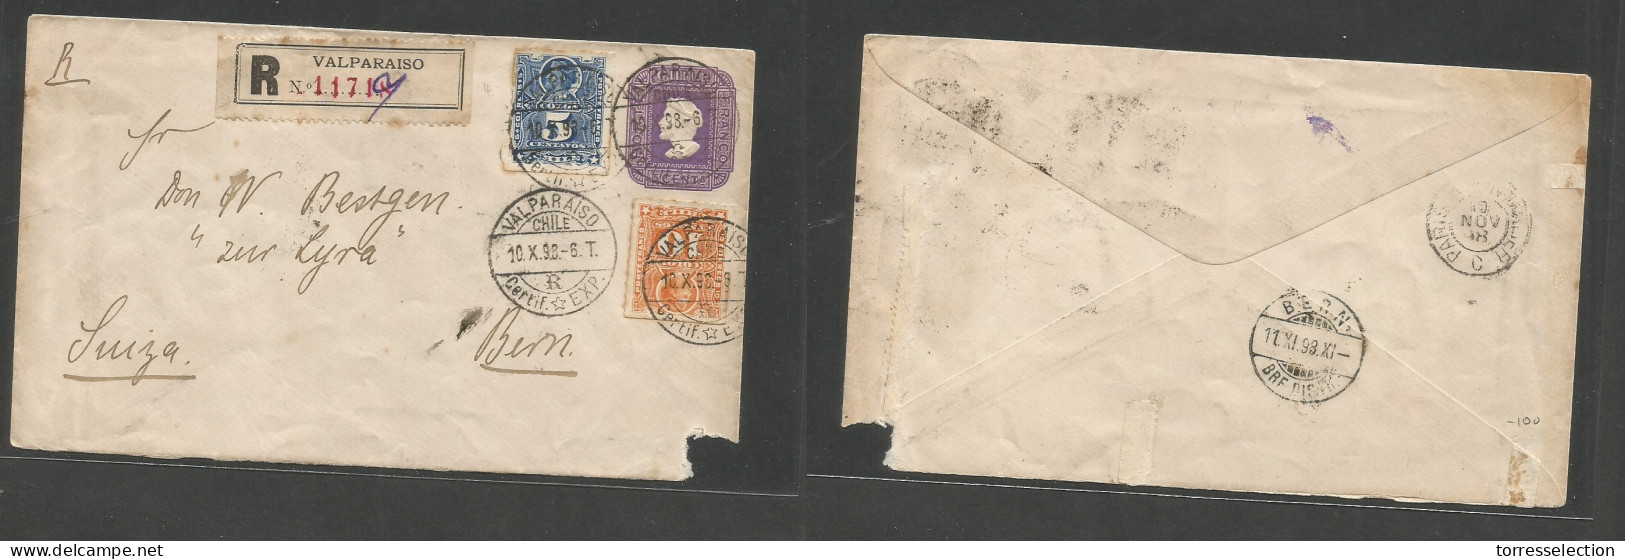 CHILE - Stationery. 1898 (10 Oct) Valp - Switzerland, Bern (11 Nov) Via Paris. Registered 5c Vivid Purple Stat Envelope  - Cile